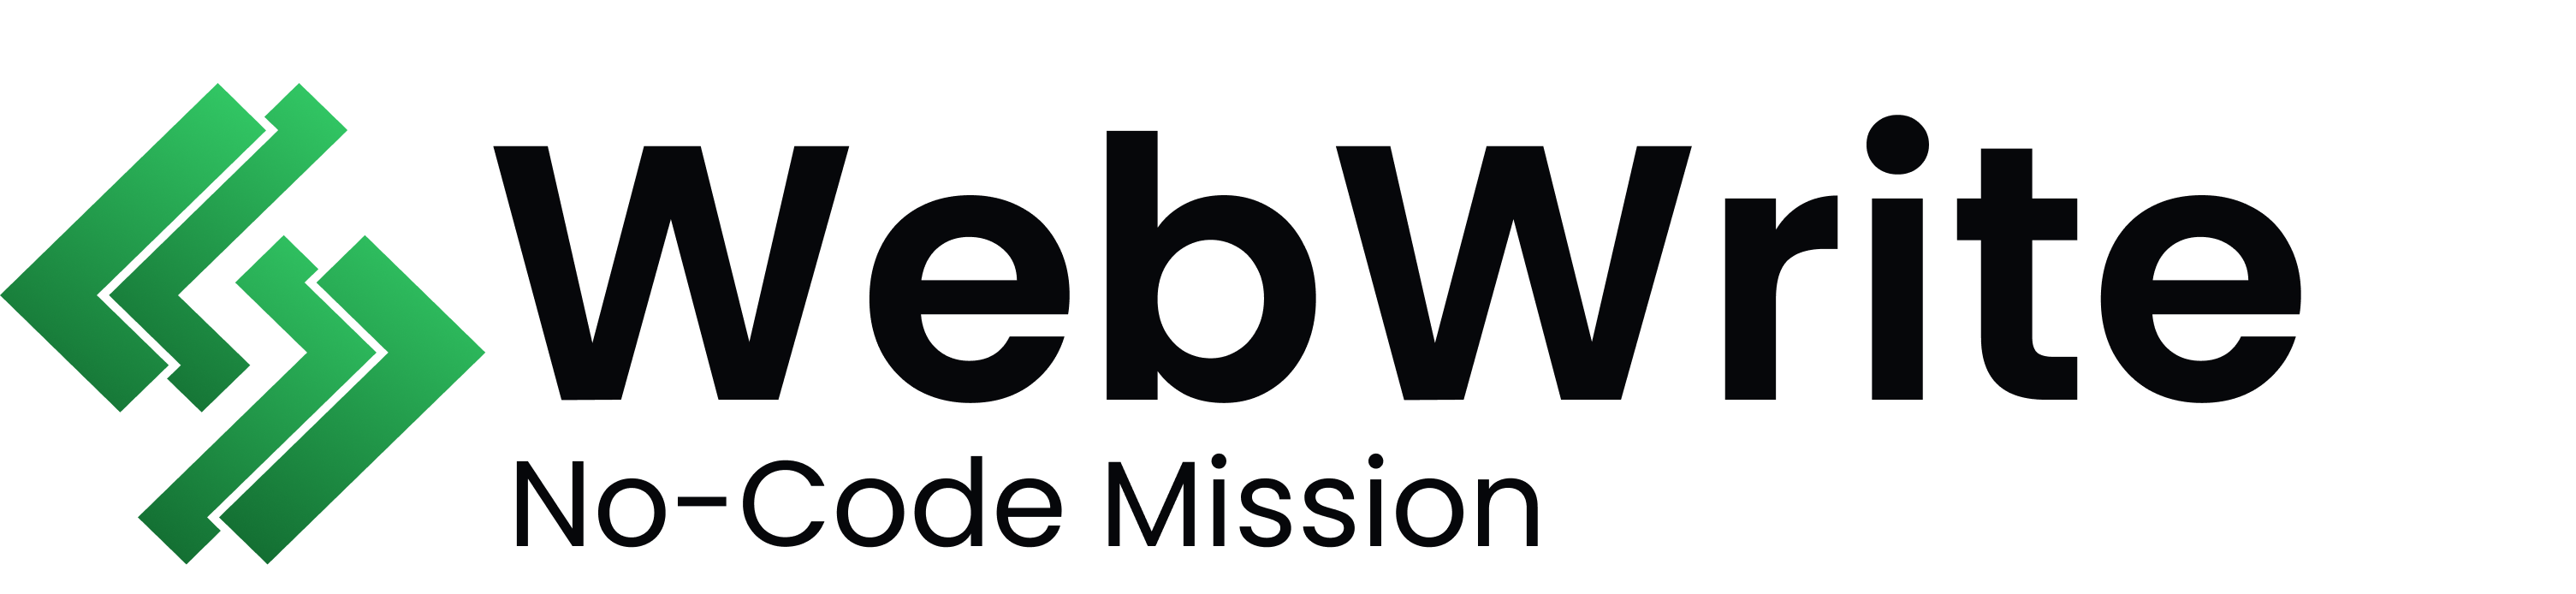 Logo Black - Webwrite company